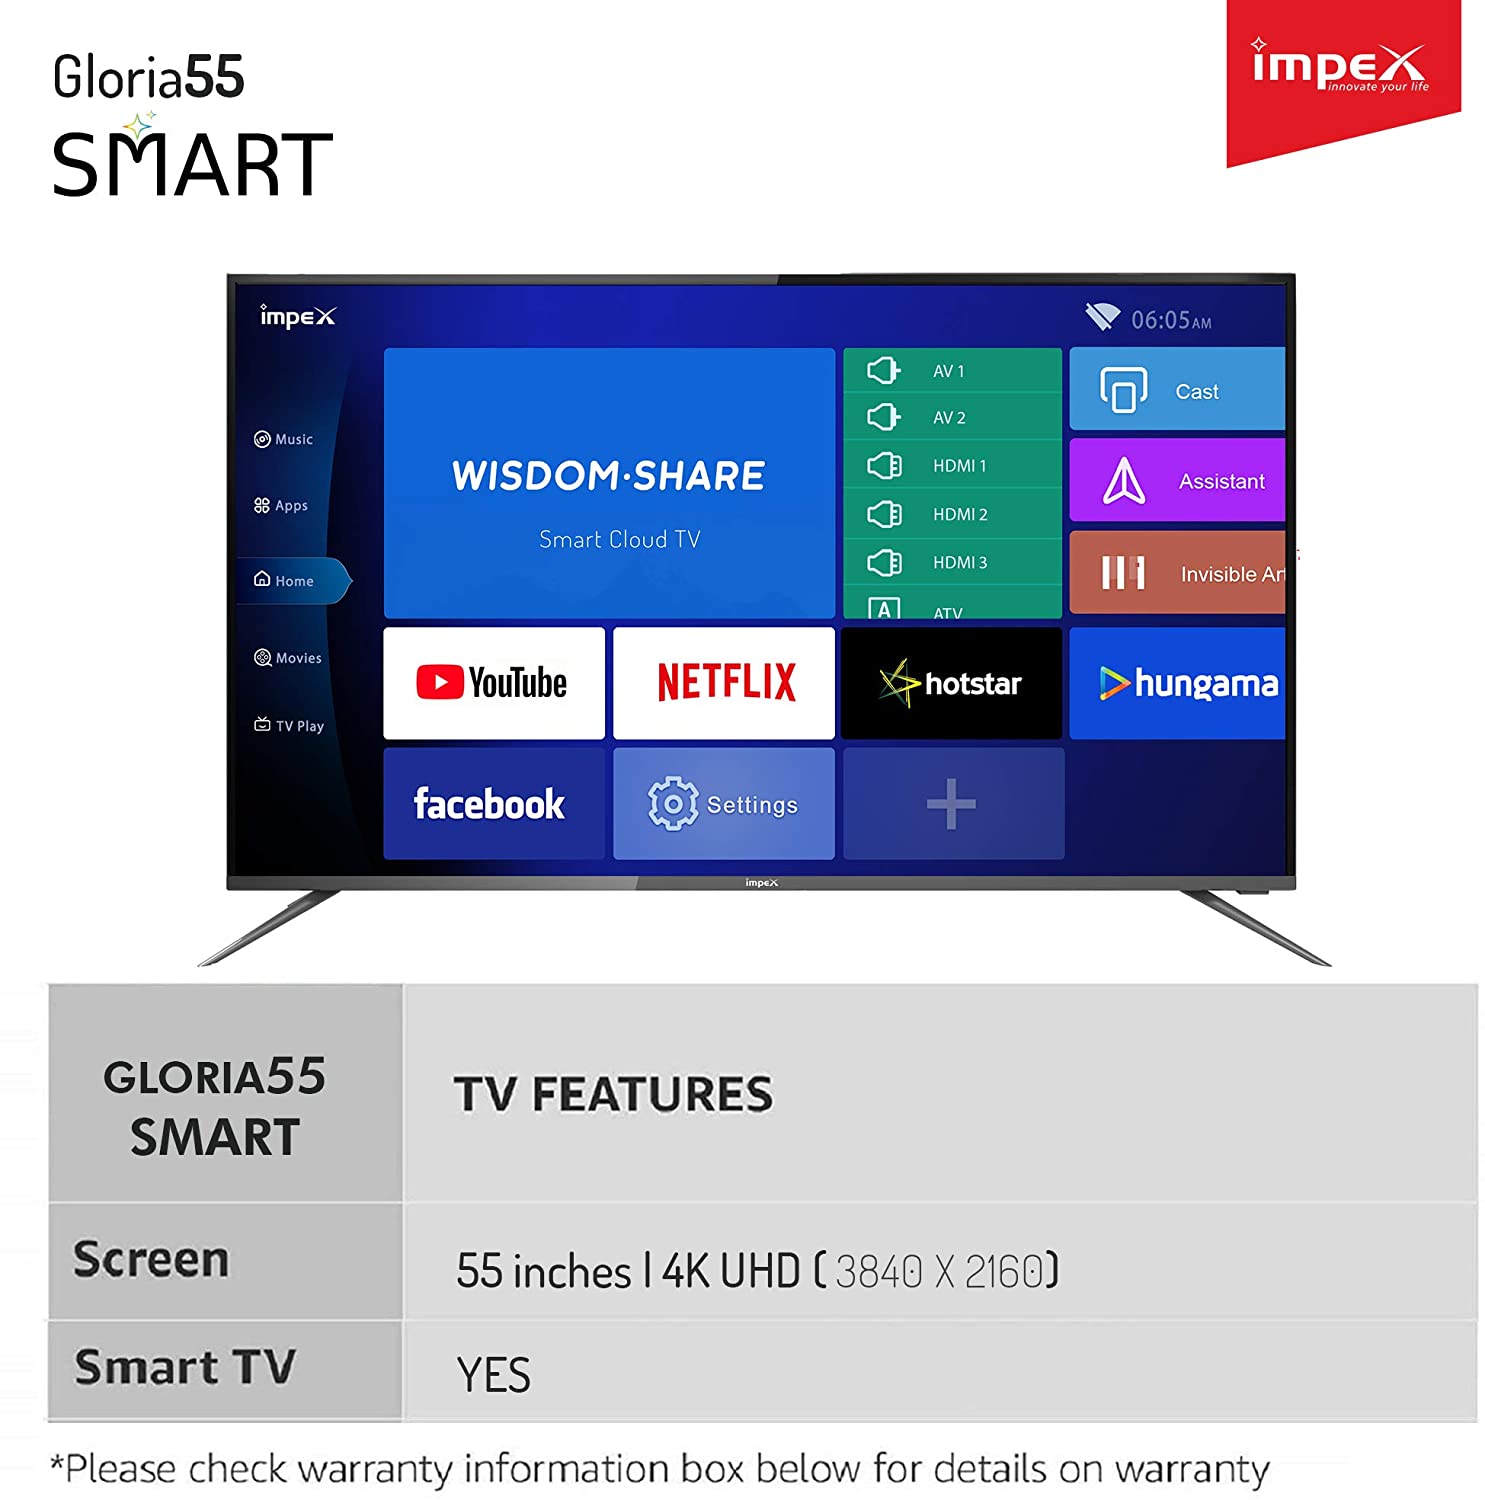 Impex GLORIA 55 UHD SMART 4K 55 Inch LED TV UHD 4K Smart TV With DVB Tuner  with Android 9.0 8GB QUAD CORE Processor 16:9 Aspect Ratio E-Share Mirror Cast Antena, VGA, USB, HDMI, Wifi Input